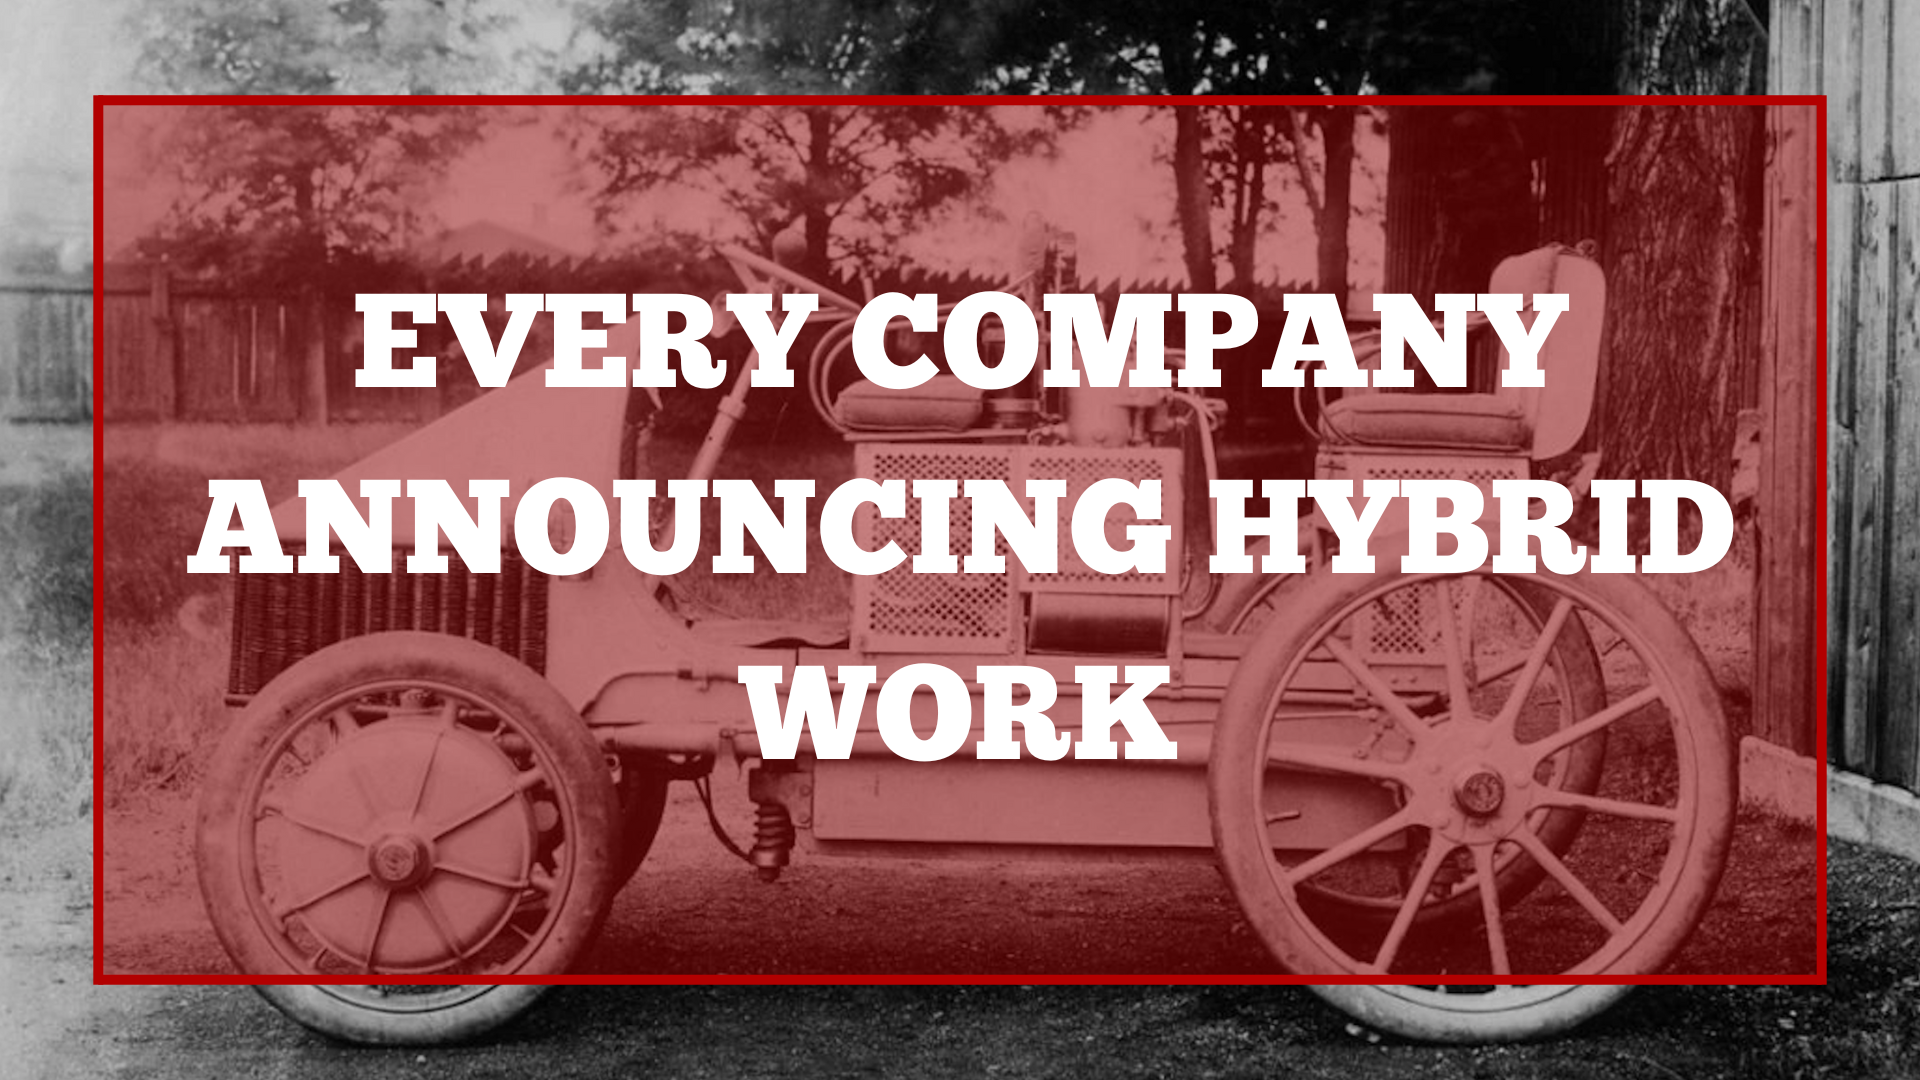 Hybrid work companies